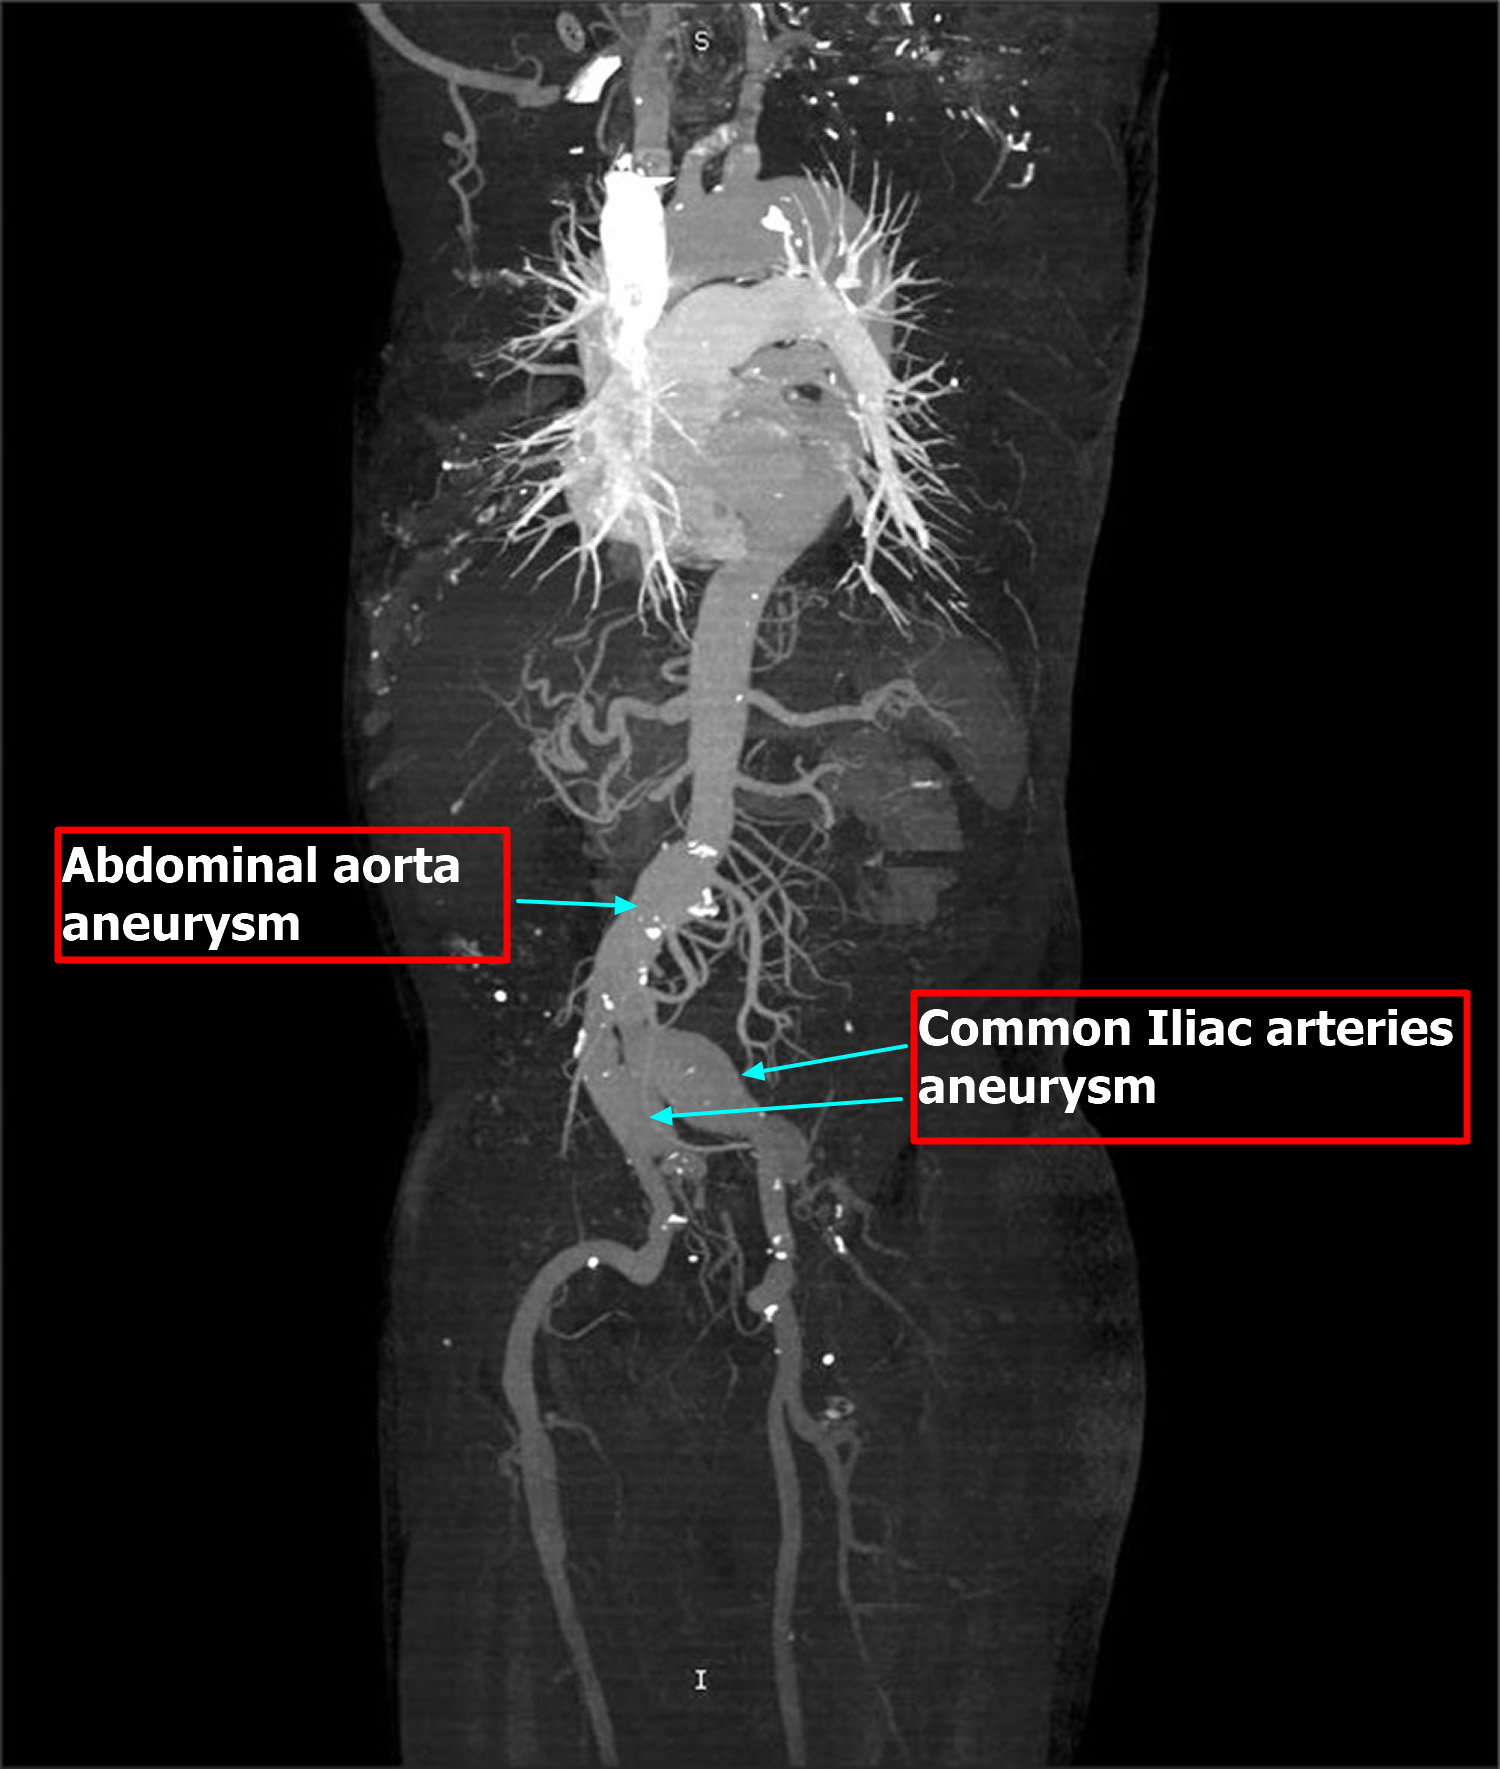 common iliac arteries aneurysm